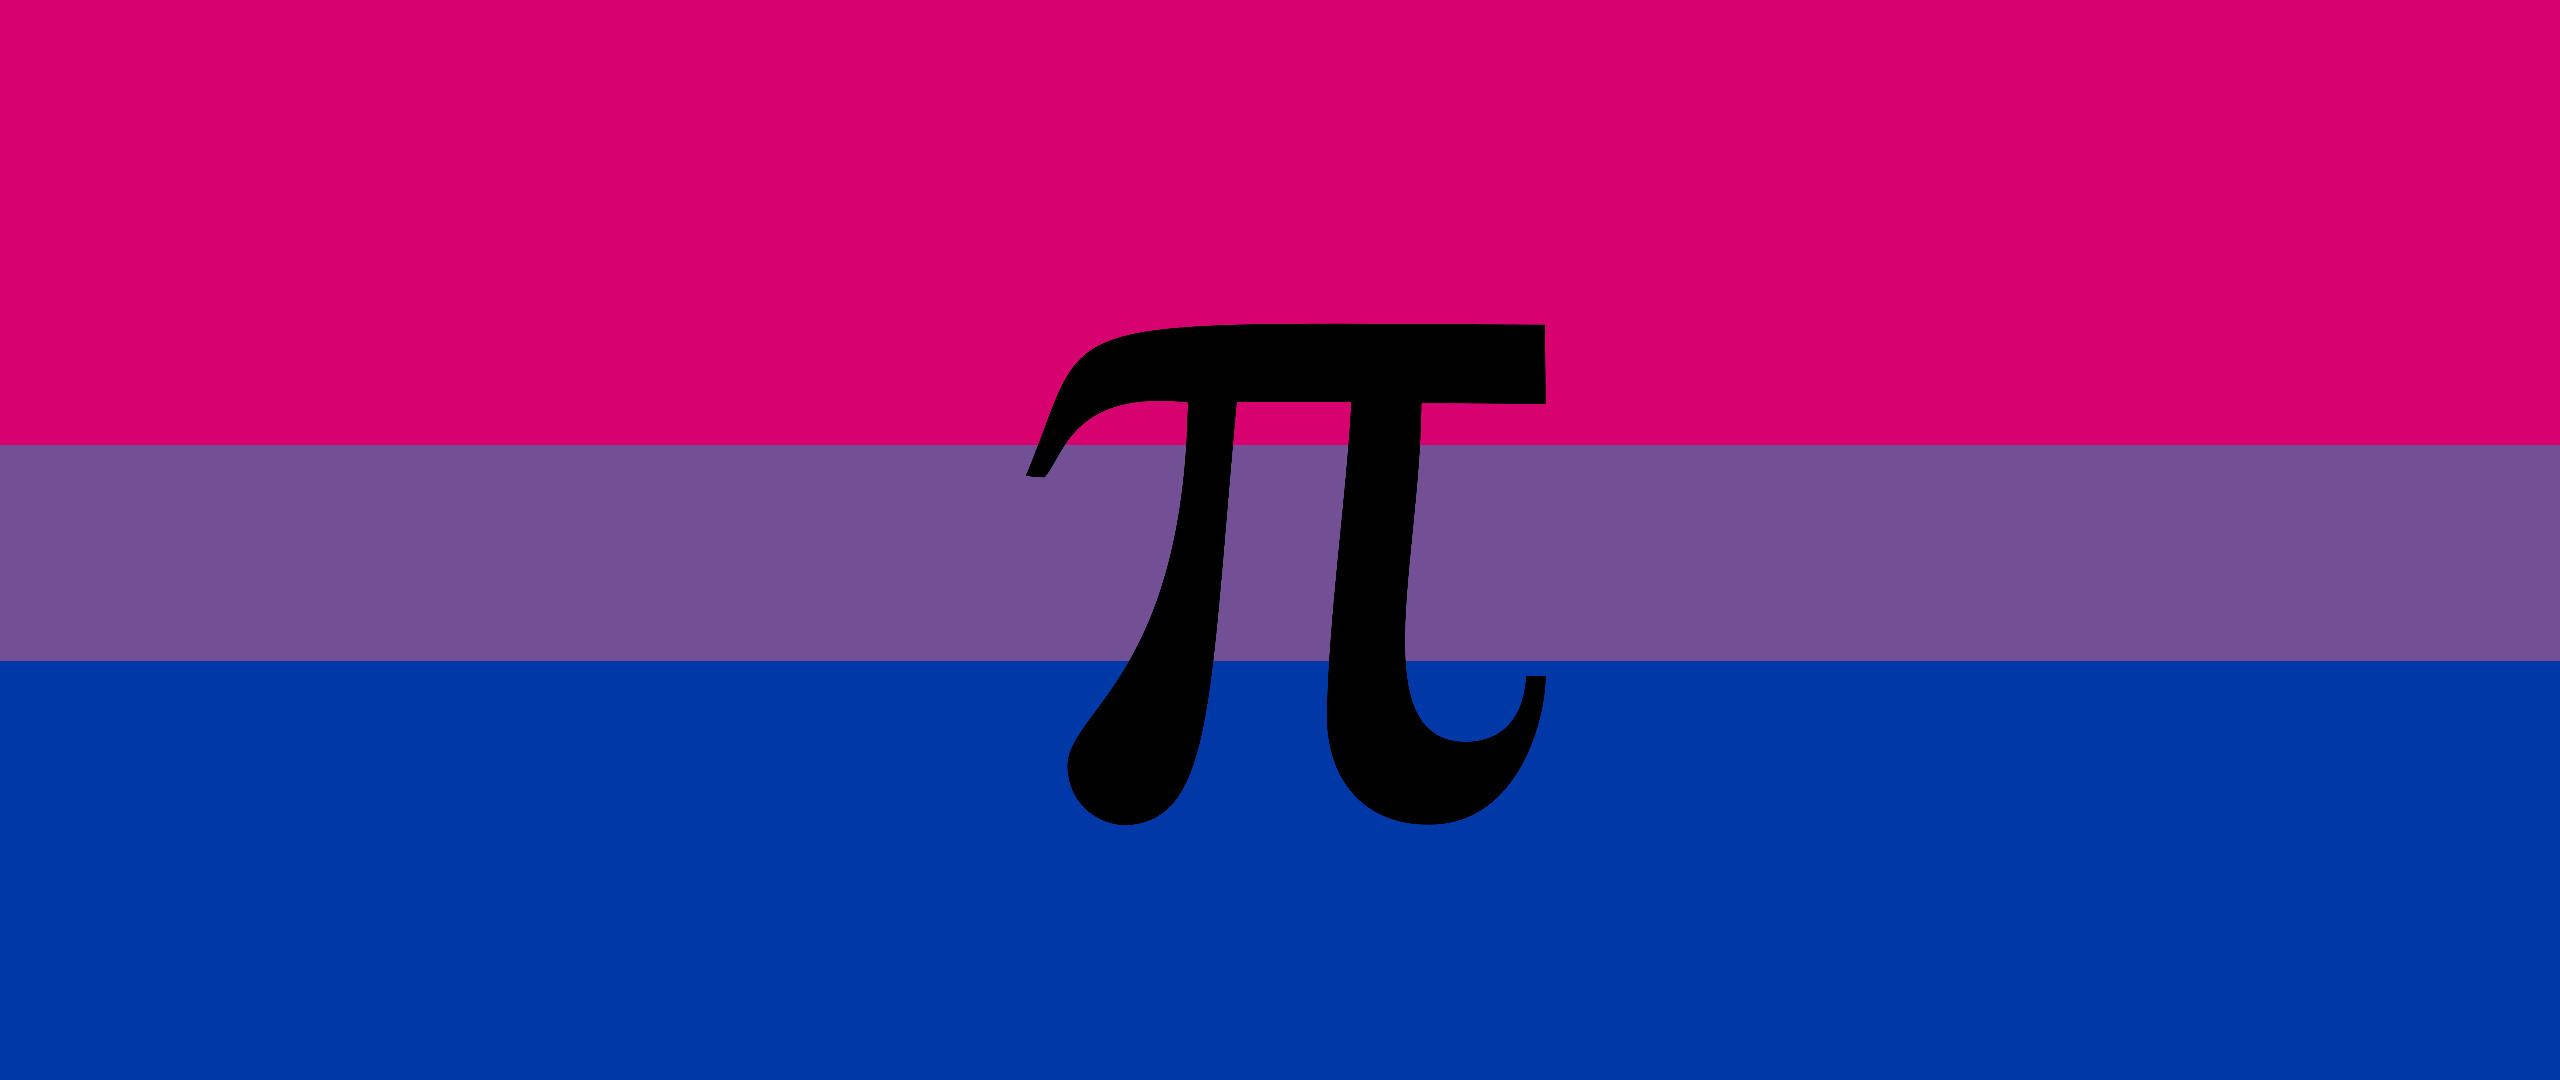 Download Bisexual Flag Pi Wallpaper 